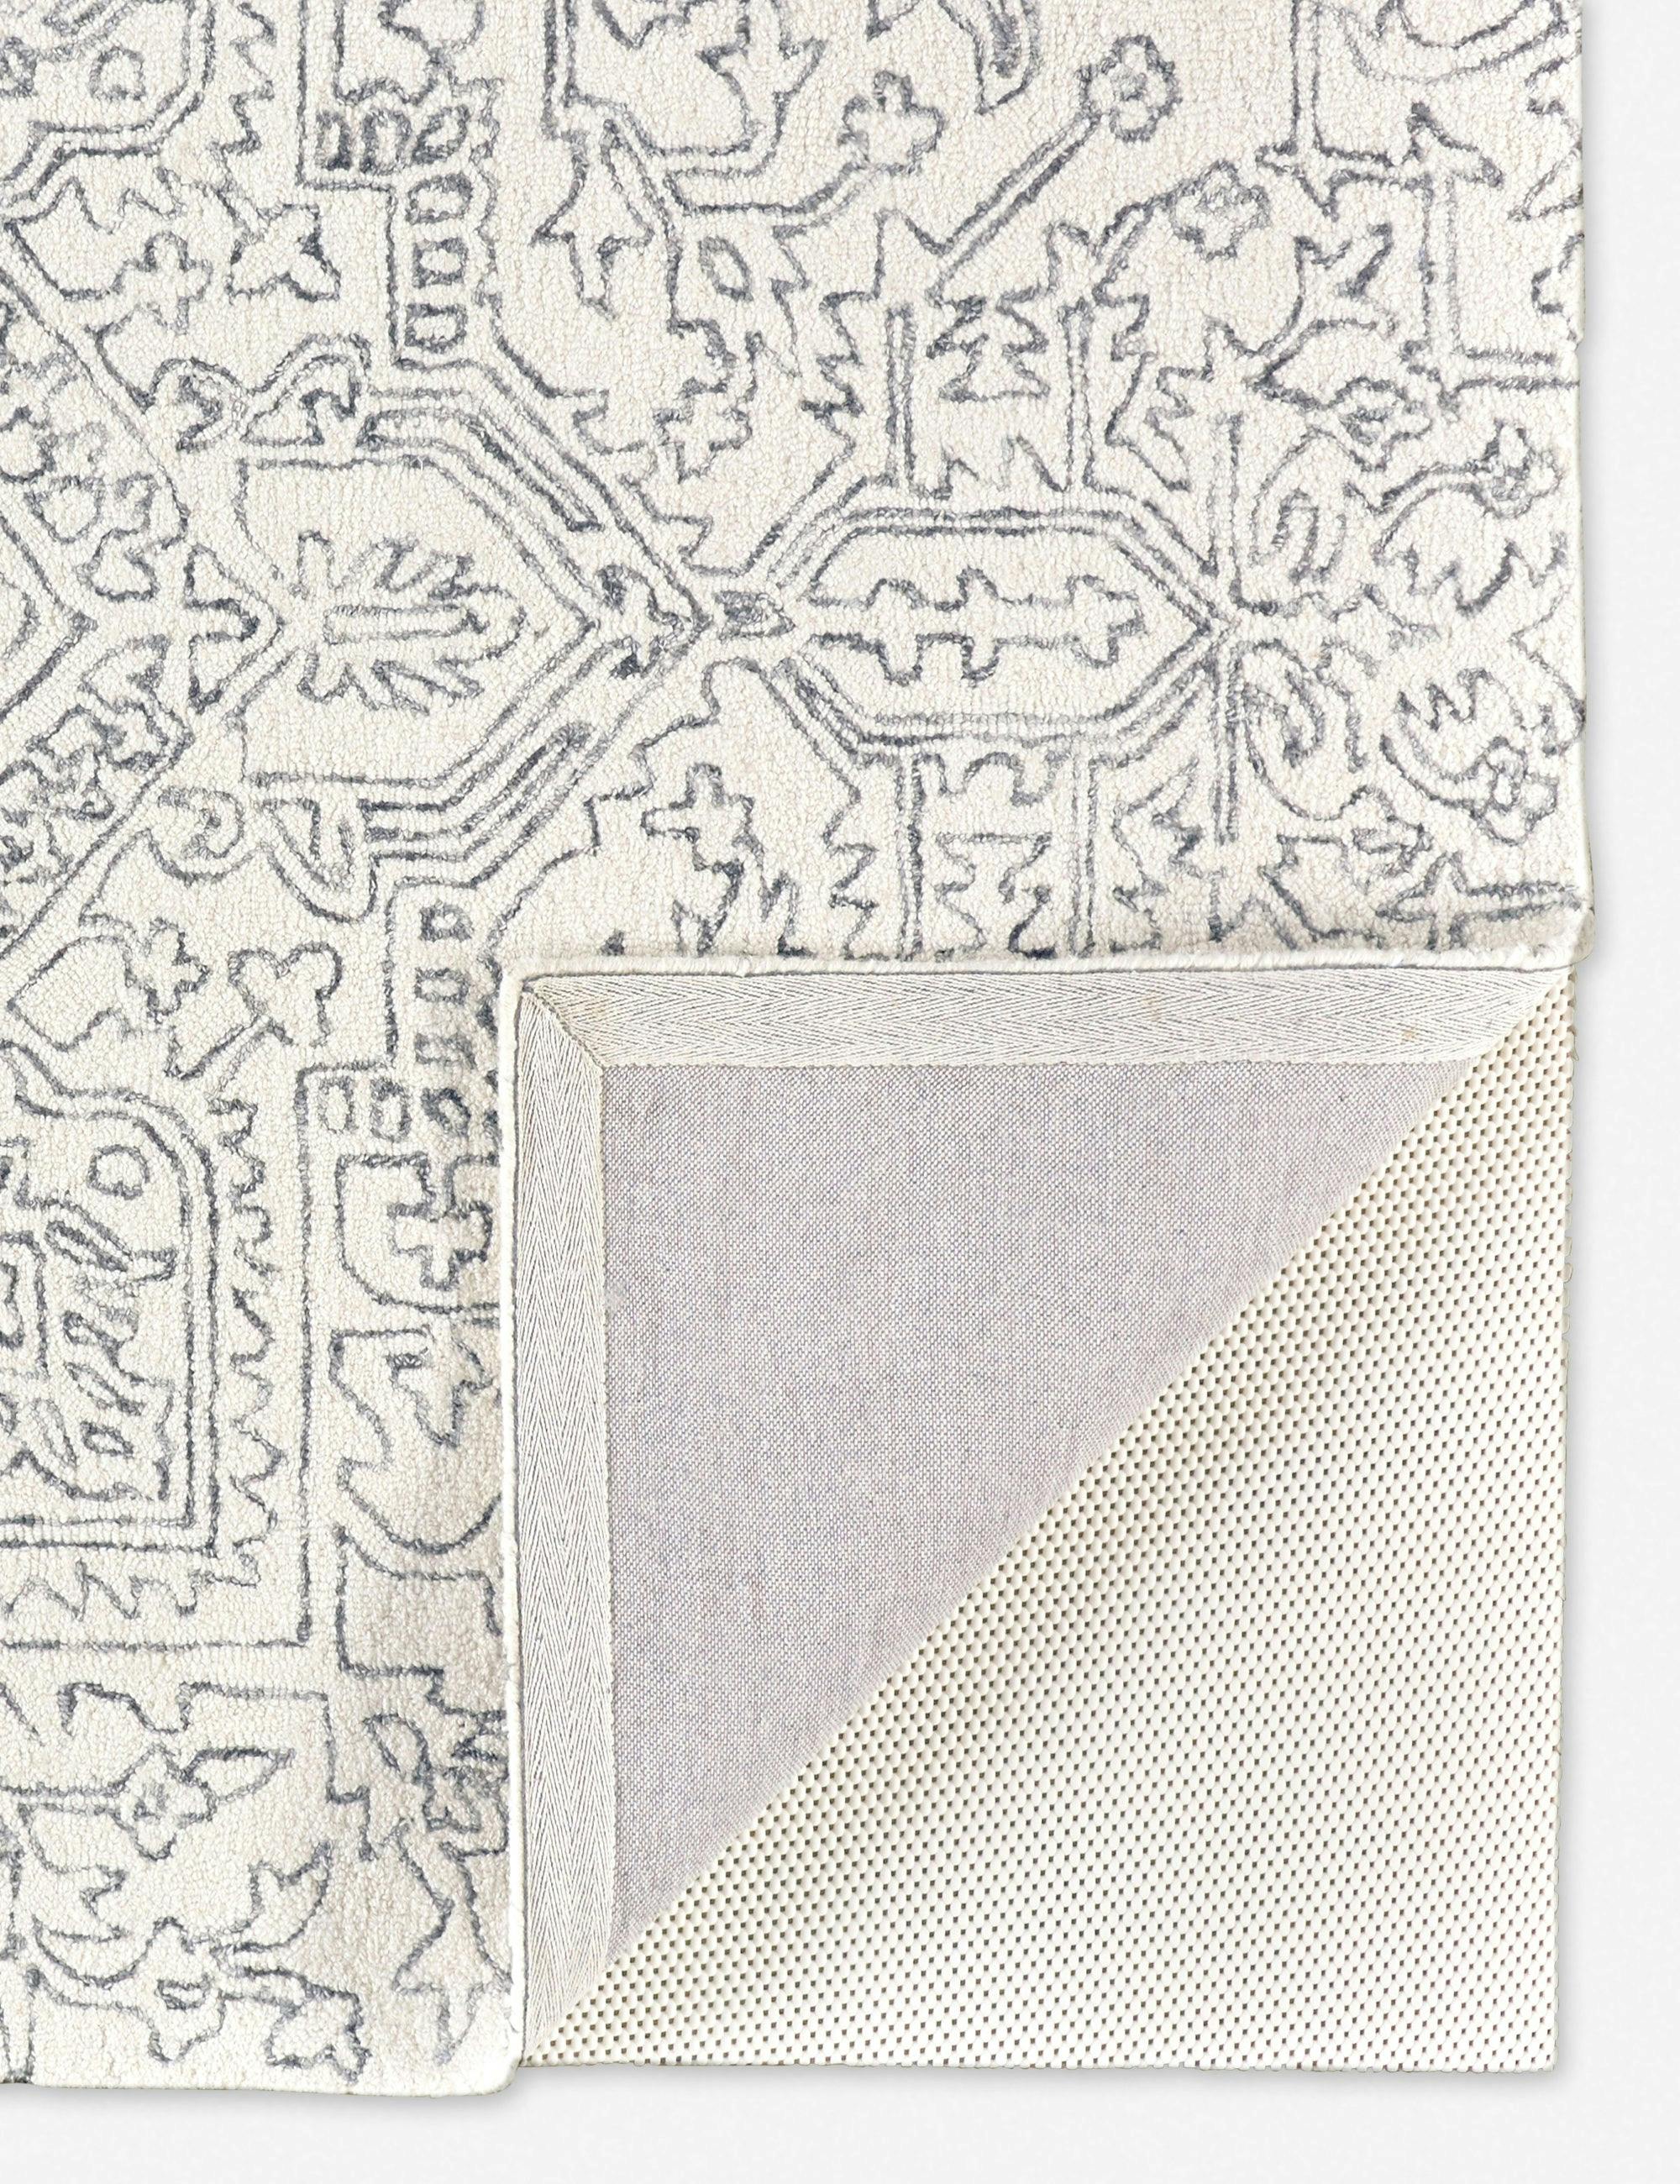 Ivory & Charcoal Hand-Tufted Wool Rectangular Rug - 2' x 3'